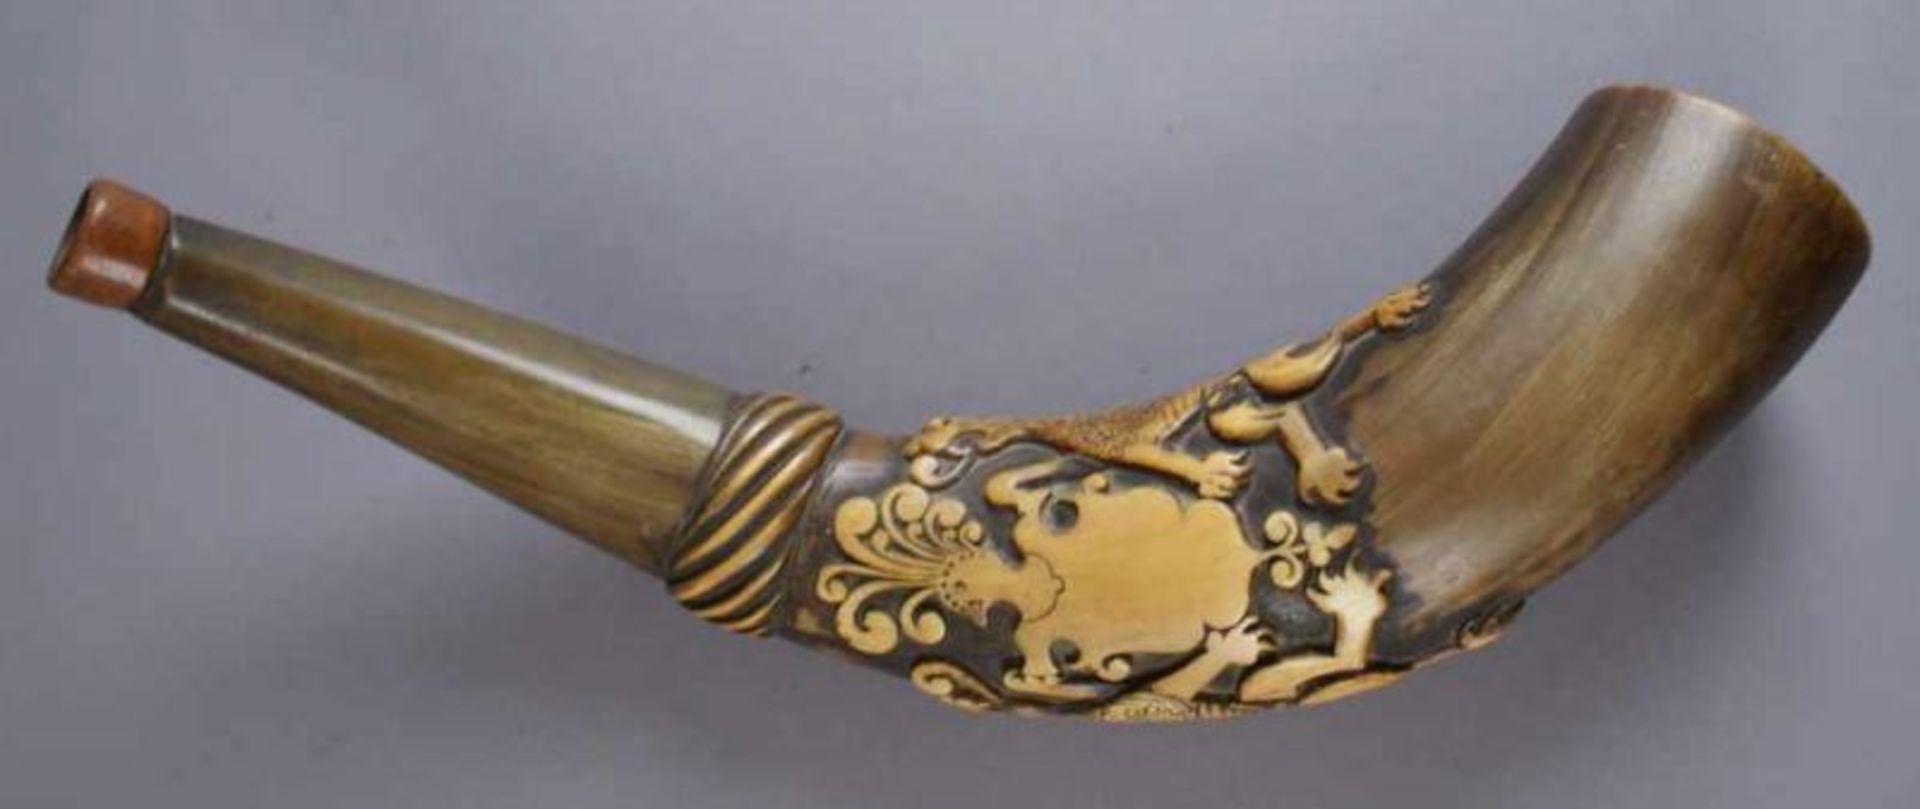 Beschnitztes Horn, 18. JH, L 45 cm 20.17 % buyer's premium on the hammer price 19.00 % VAT on